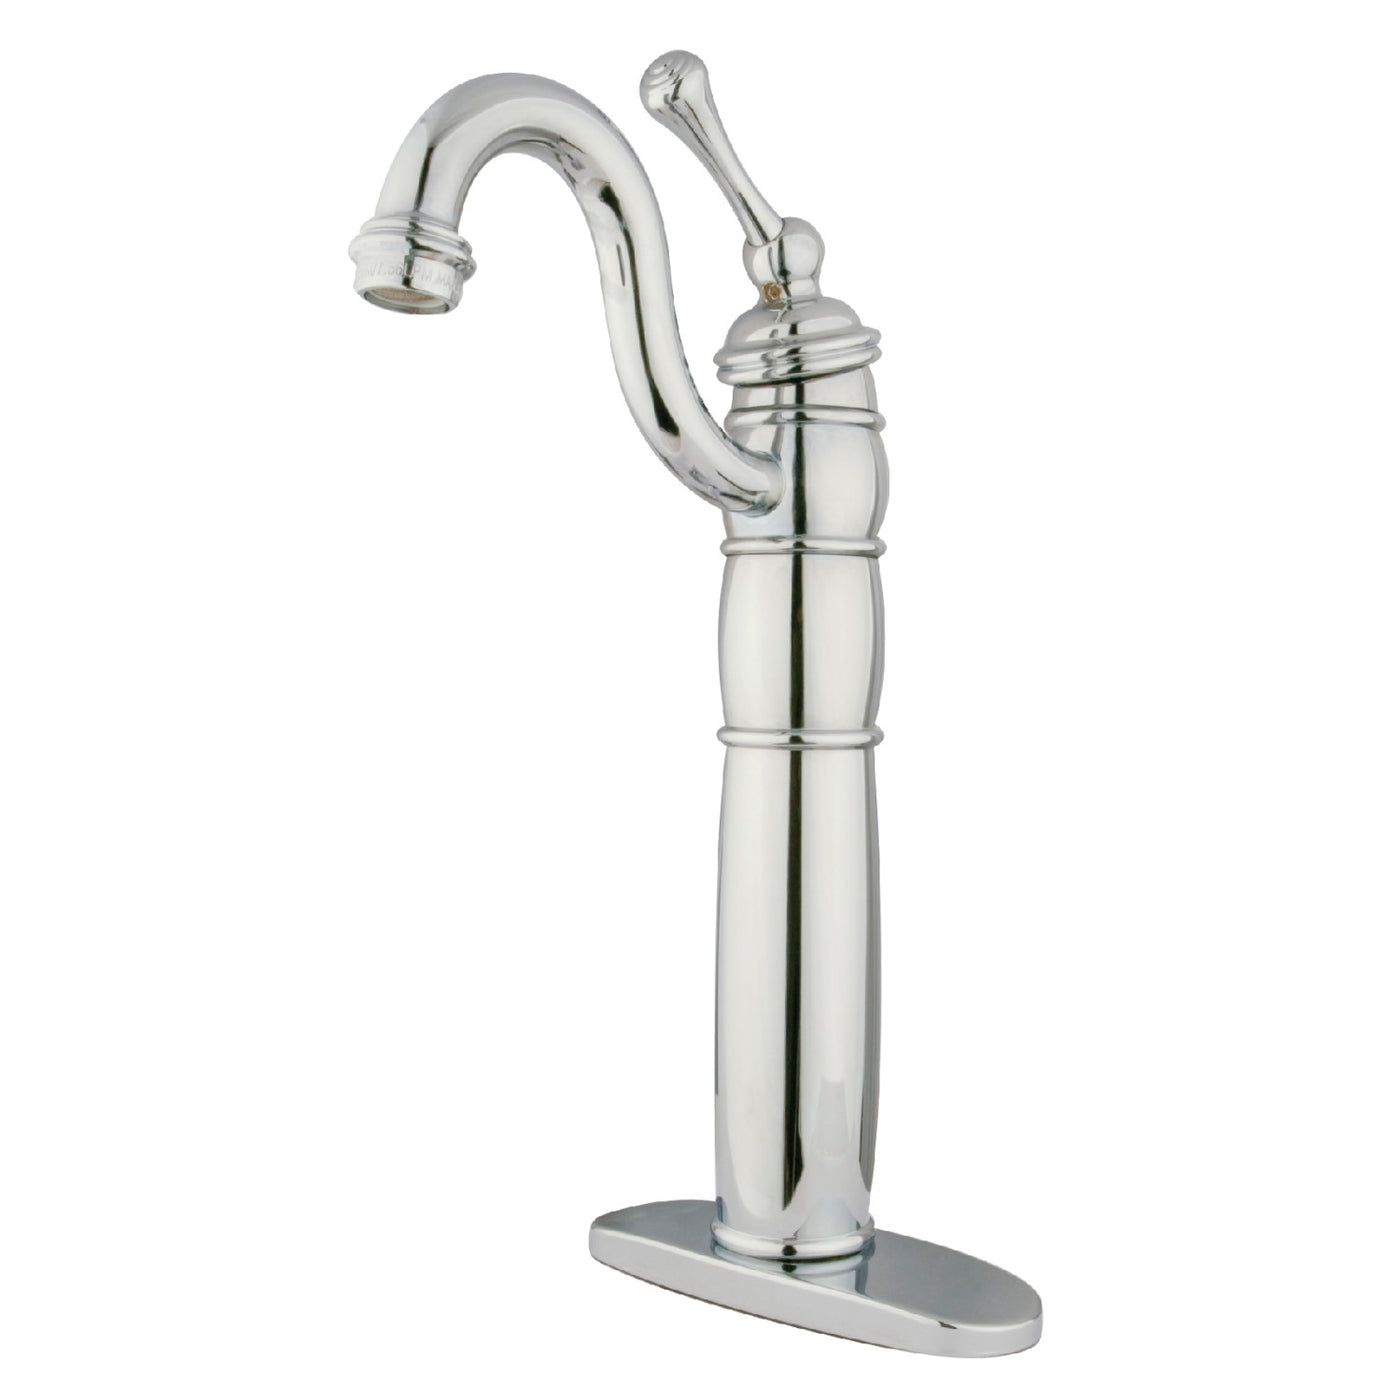 Elements of Design EB1421BL Vessel Sink Faucet, Polished Chrome